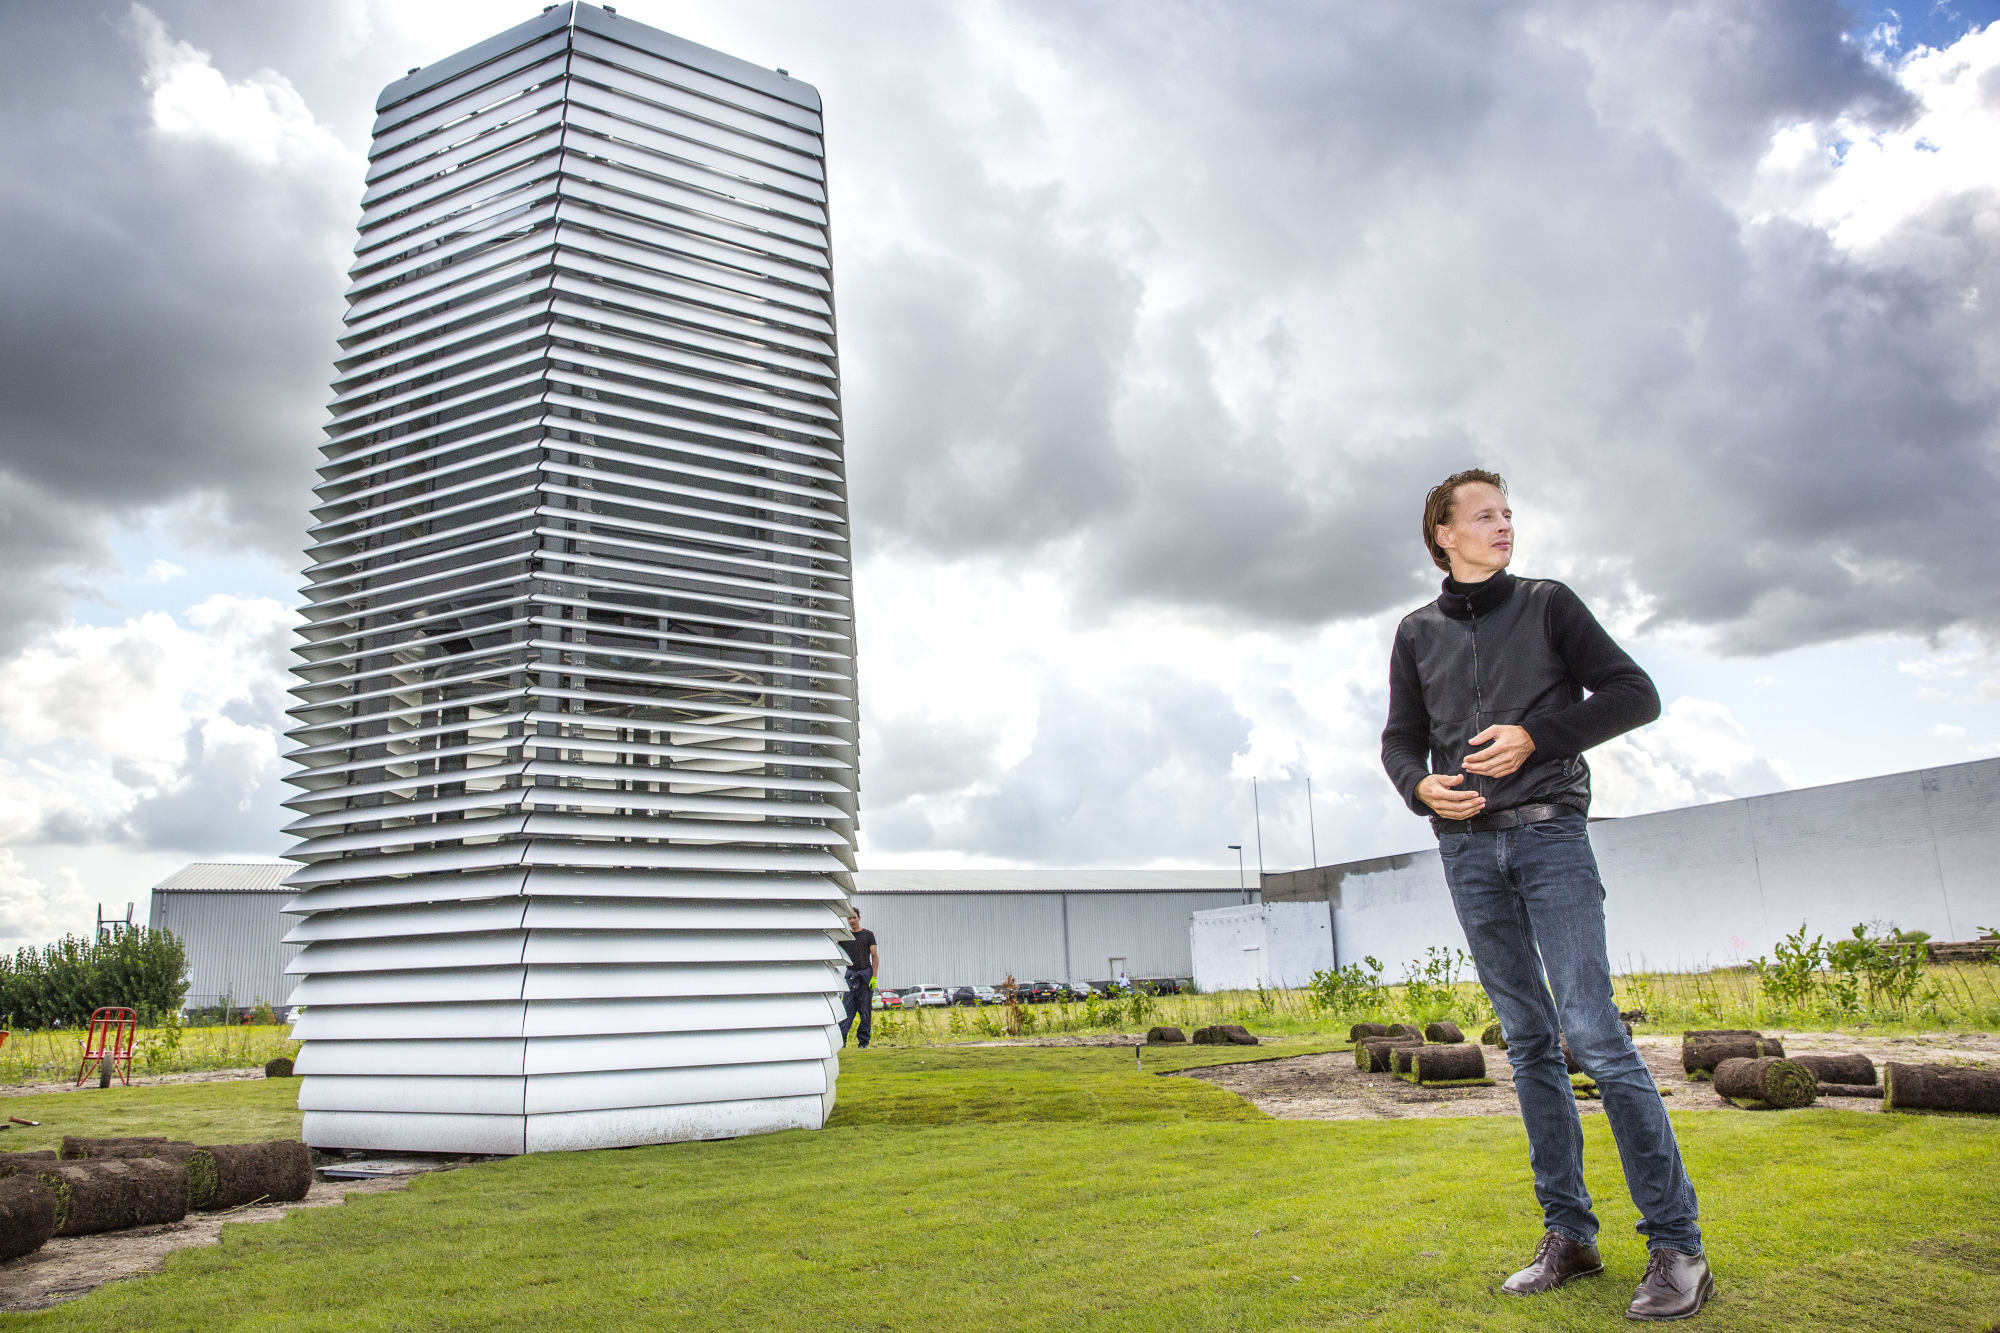 Daan Roosegaarde with his smog-free tower.
